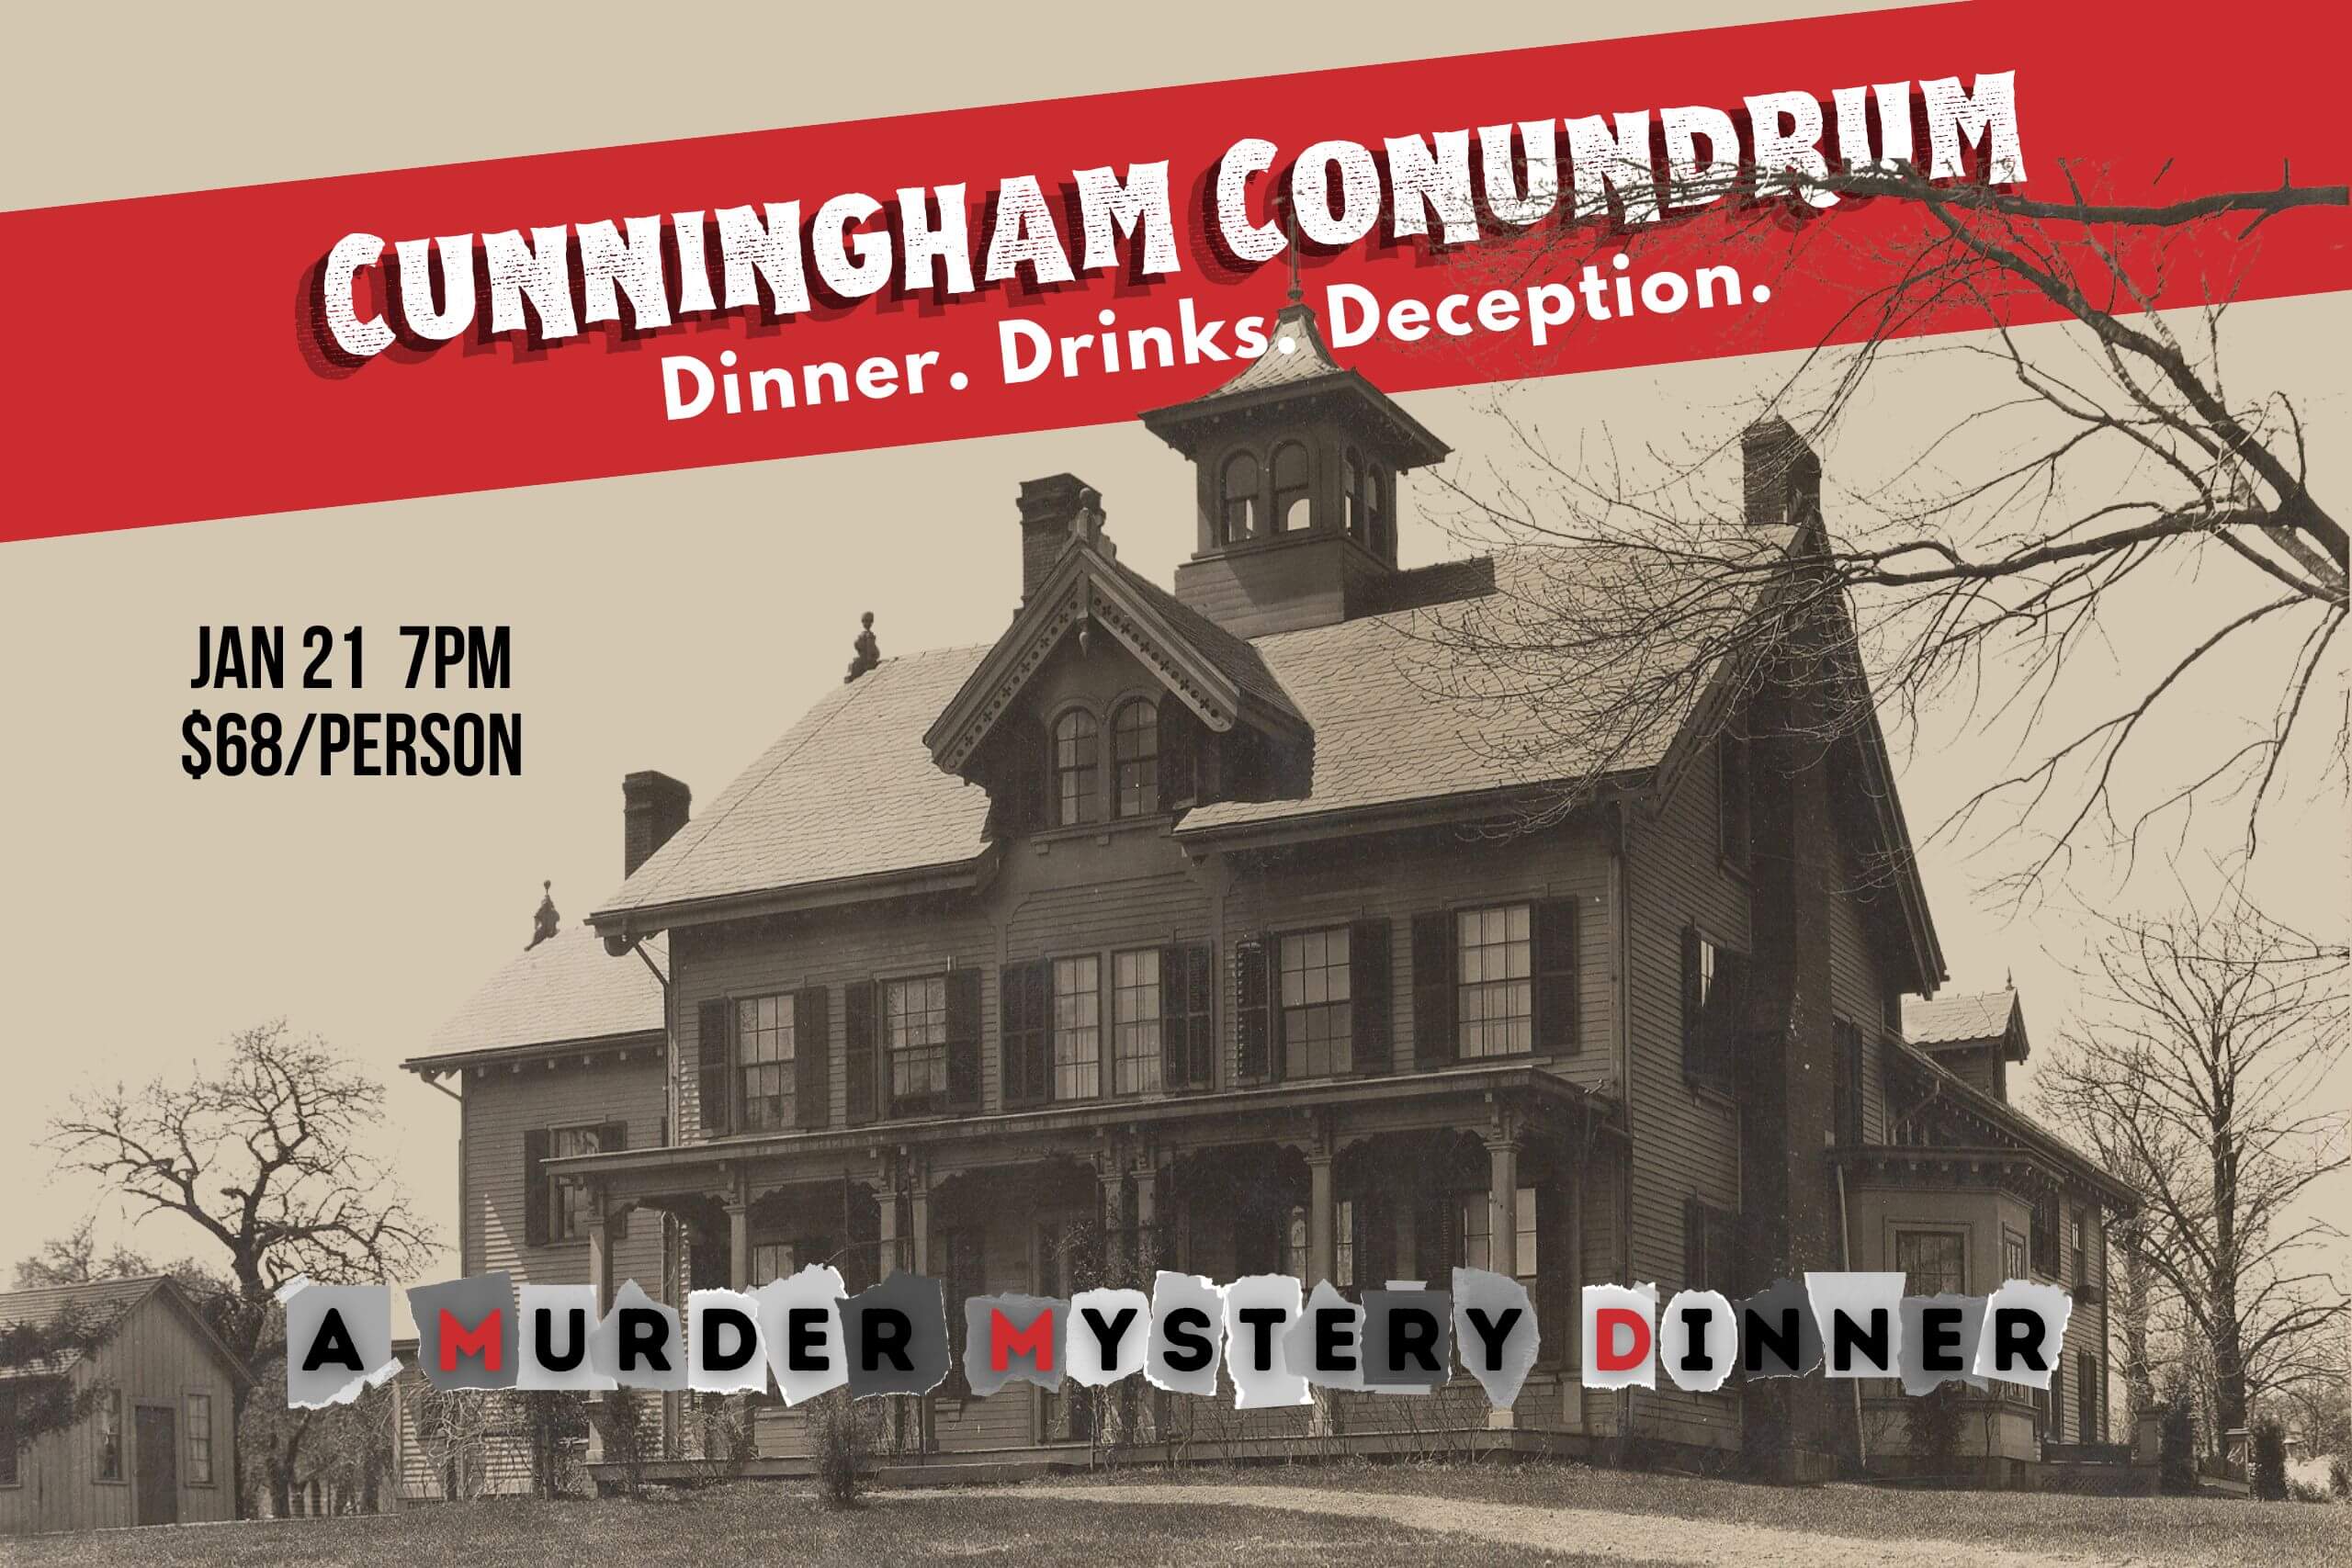 Cunningham Conundrum Murder Mystery Dinner at Lyman Orchards